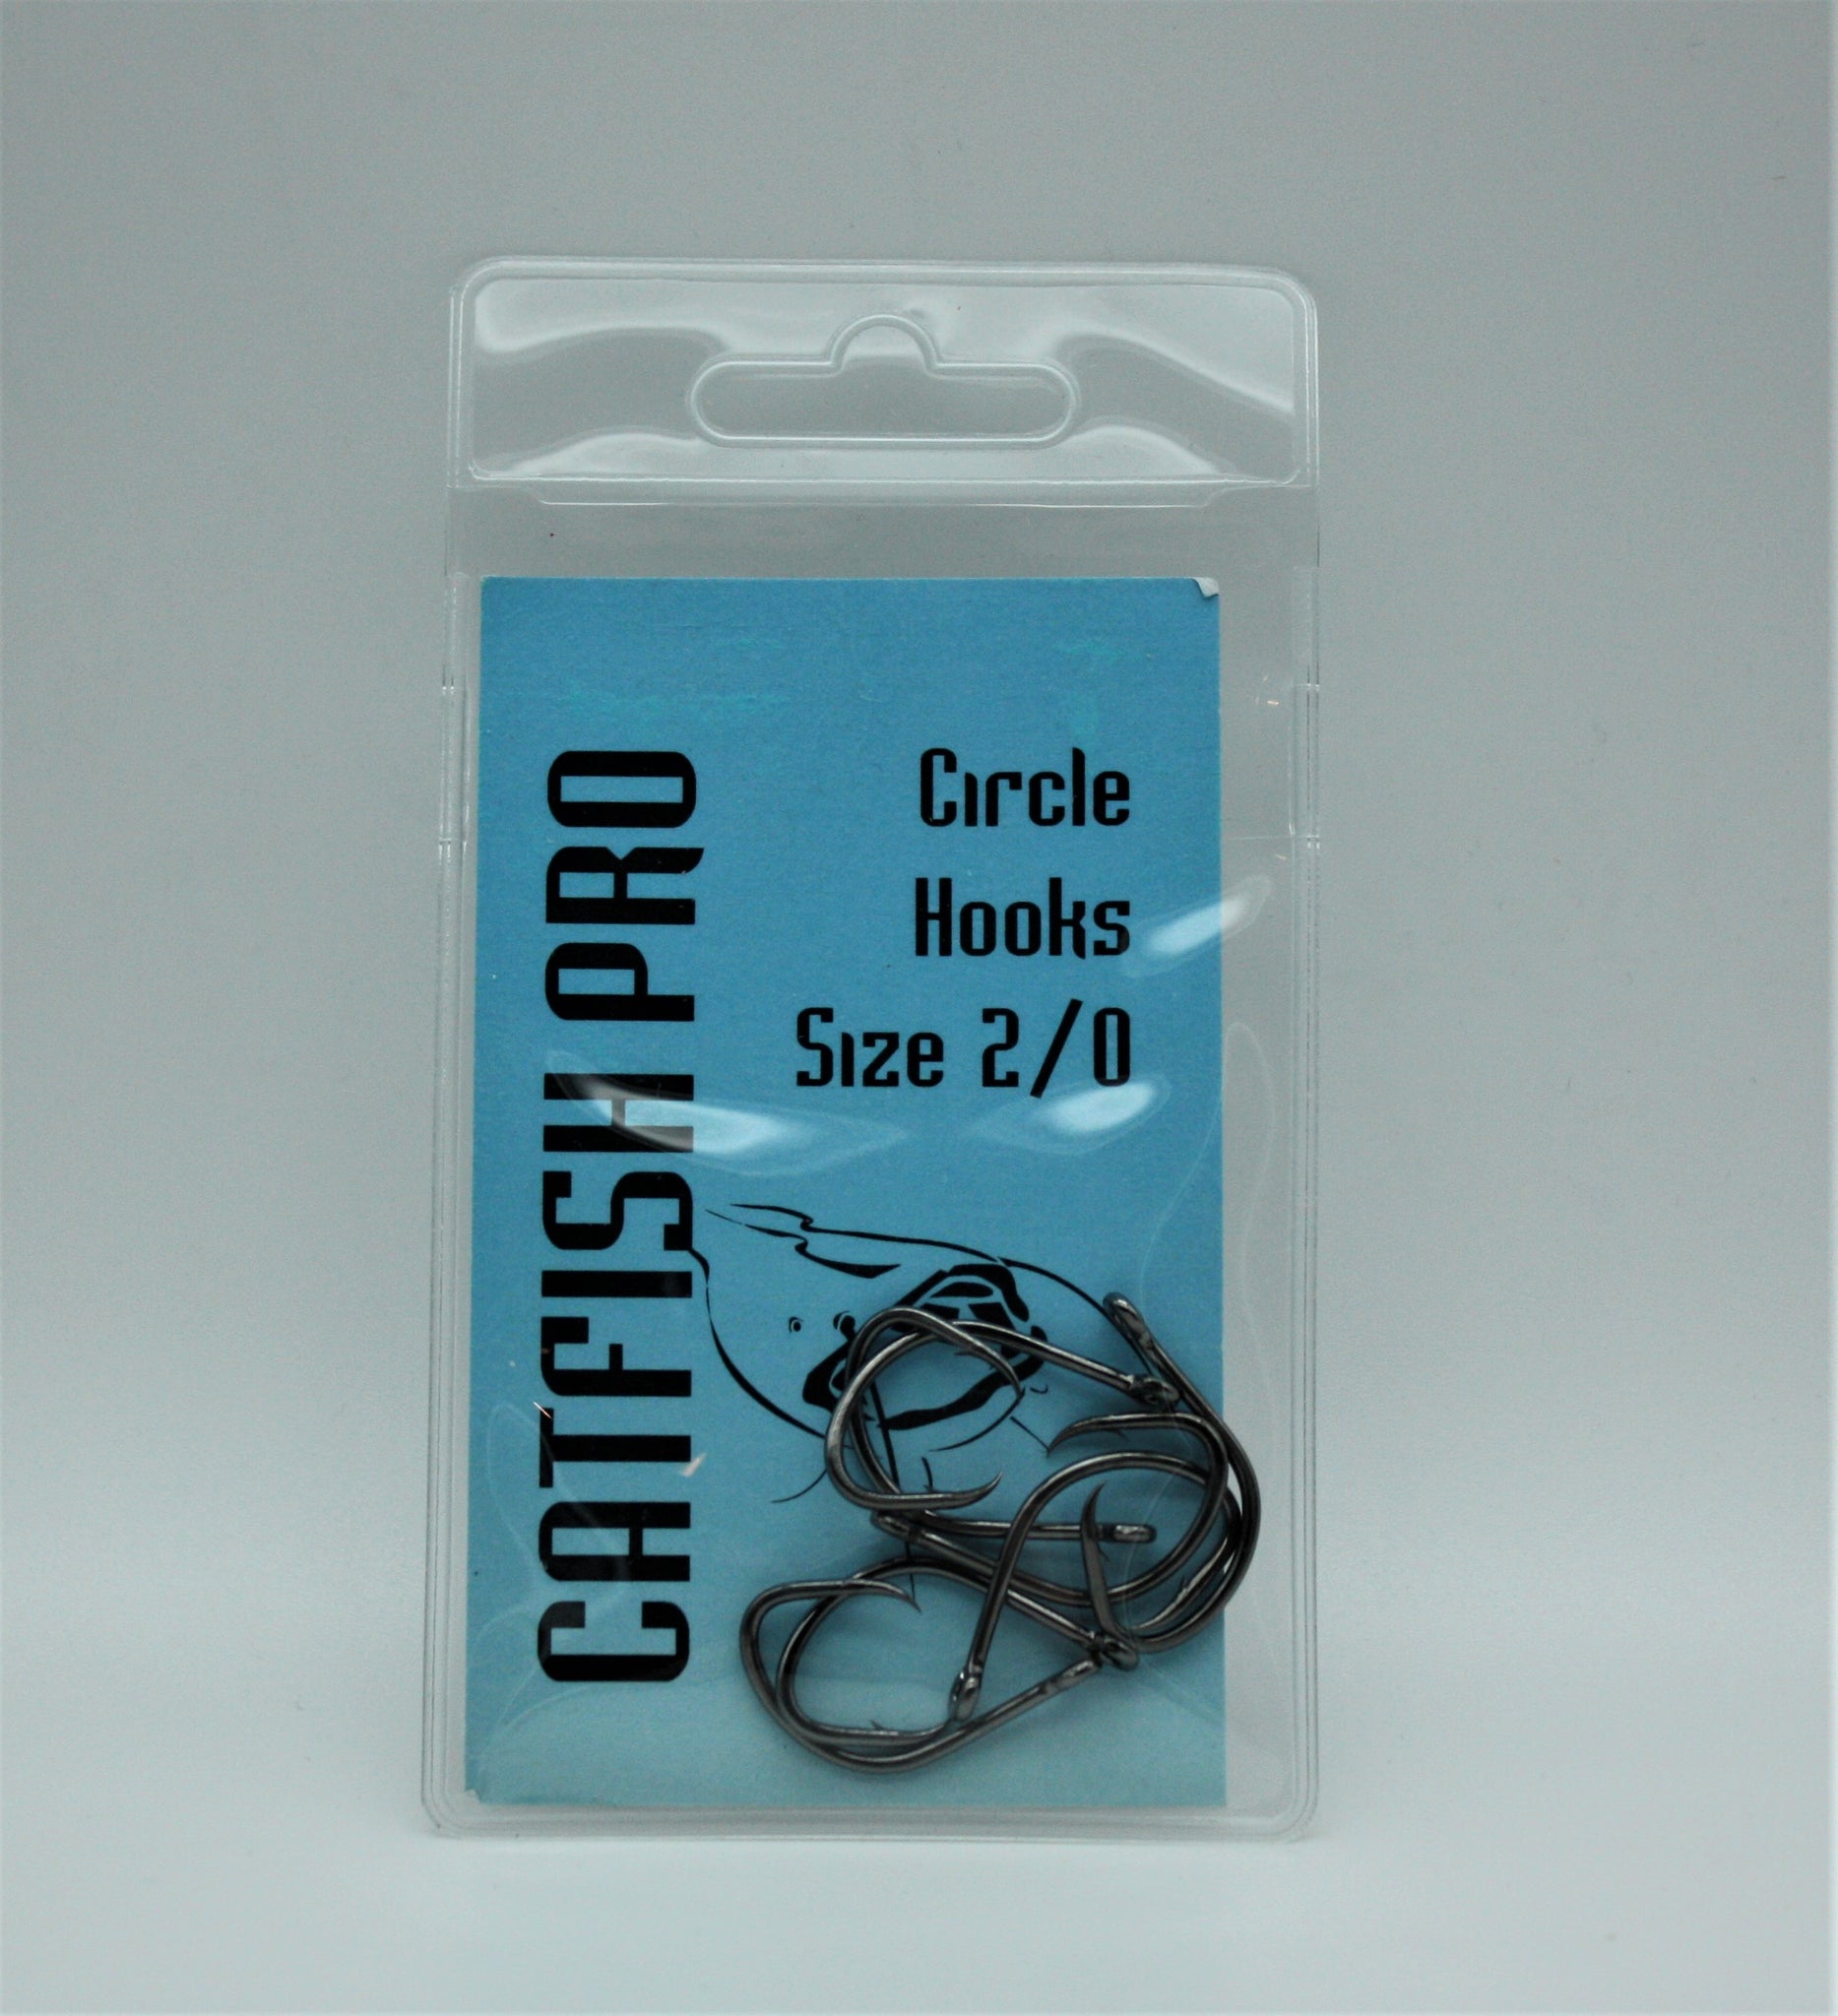 Circle Hooks Size 2 - 8/0 (Barbed)